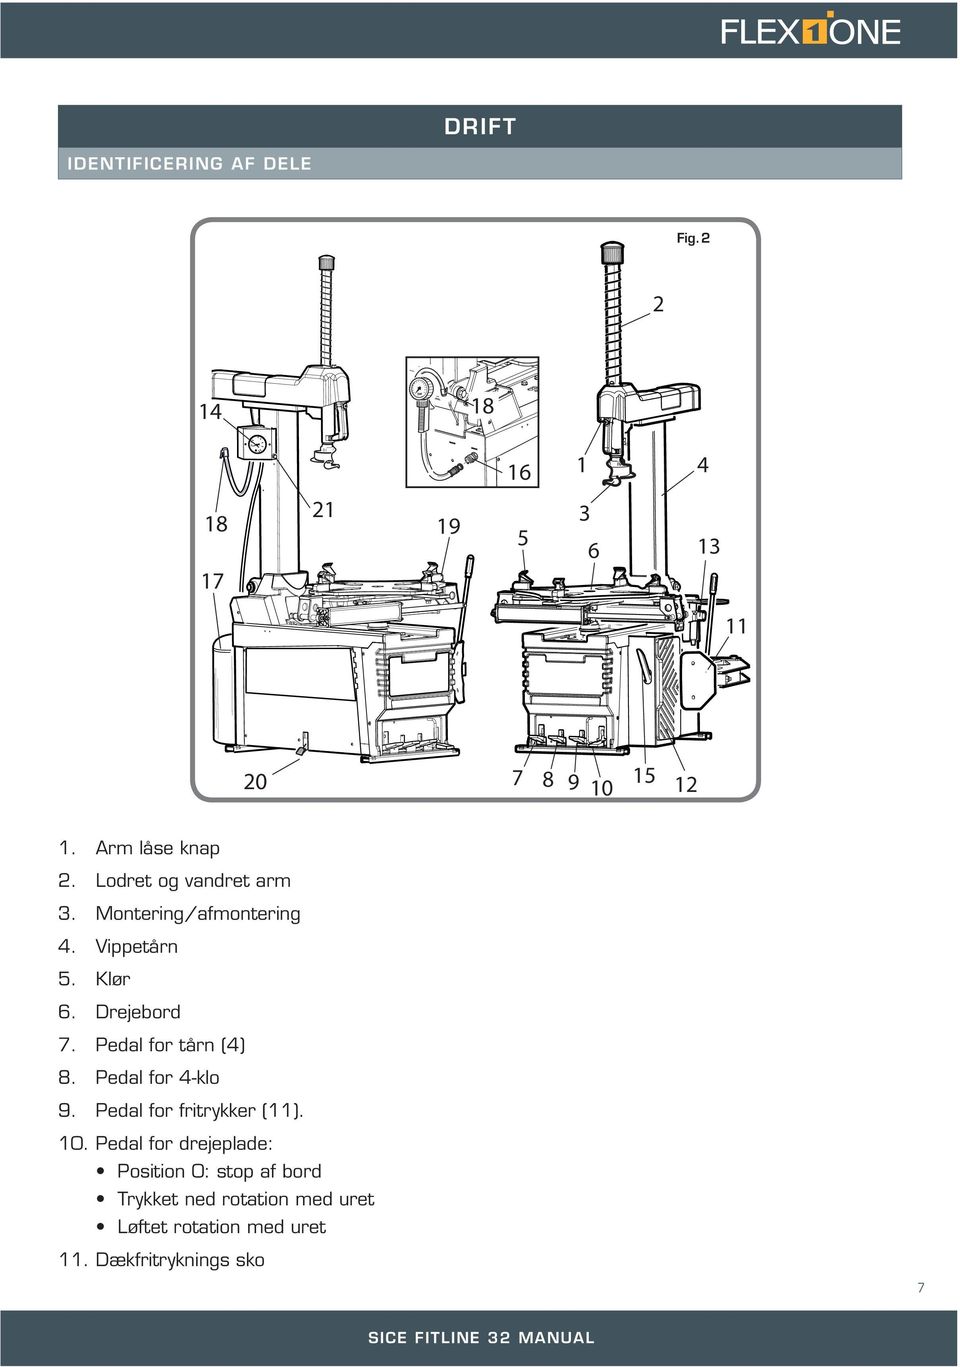 Pedal for 4-klo 9. Pedal for fritrykker 102 (11). User Manual FITLINE 32-32 2V - 32 GP - 32 GP 2V 10.